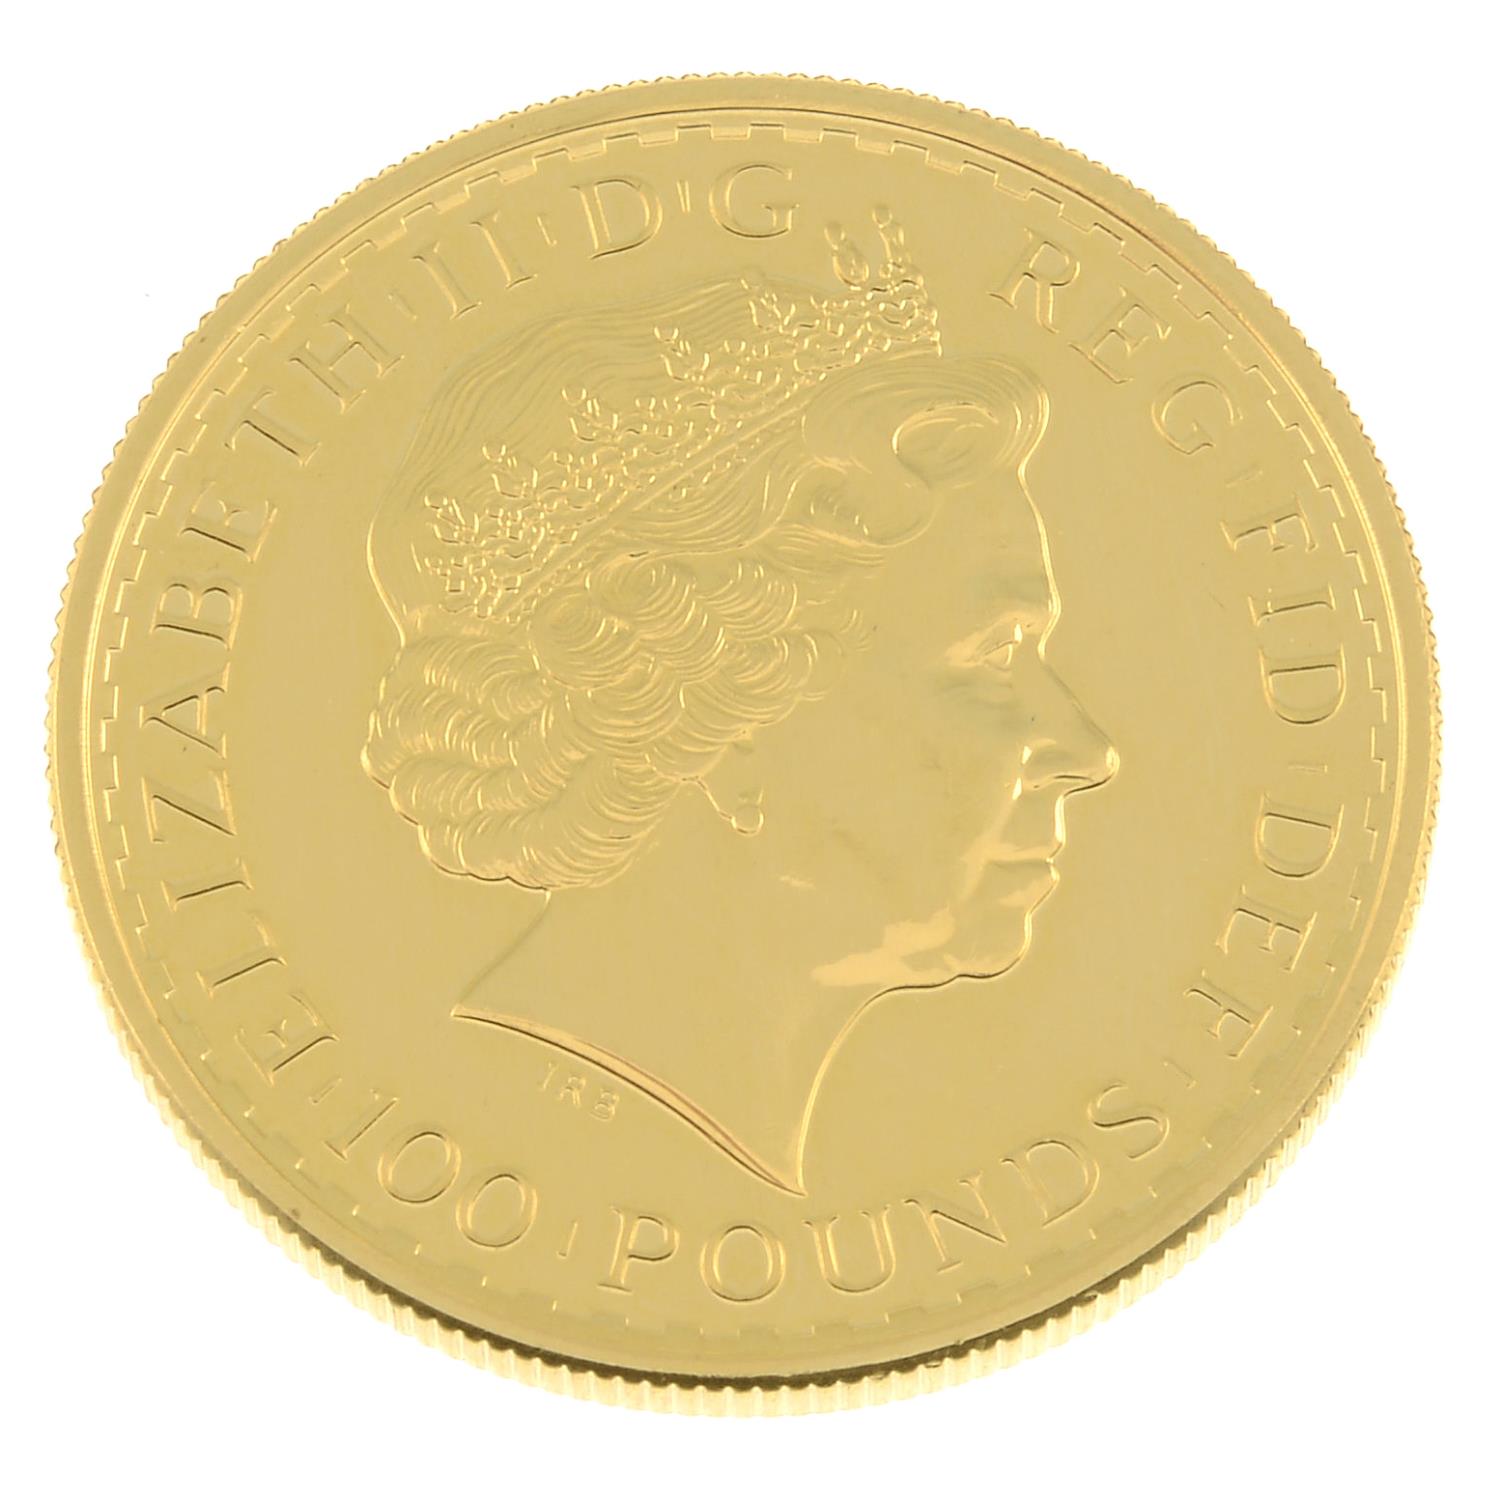 Elizabeth II, gold Britannia 100-Pounds 2012 (S 4450).